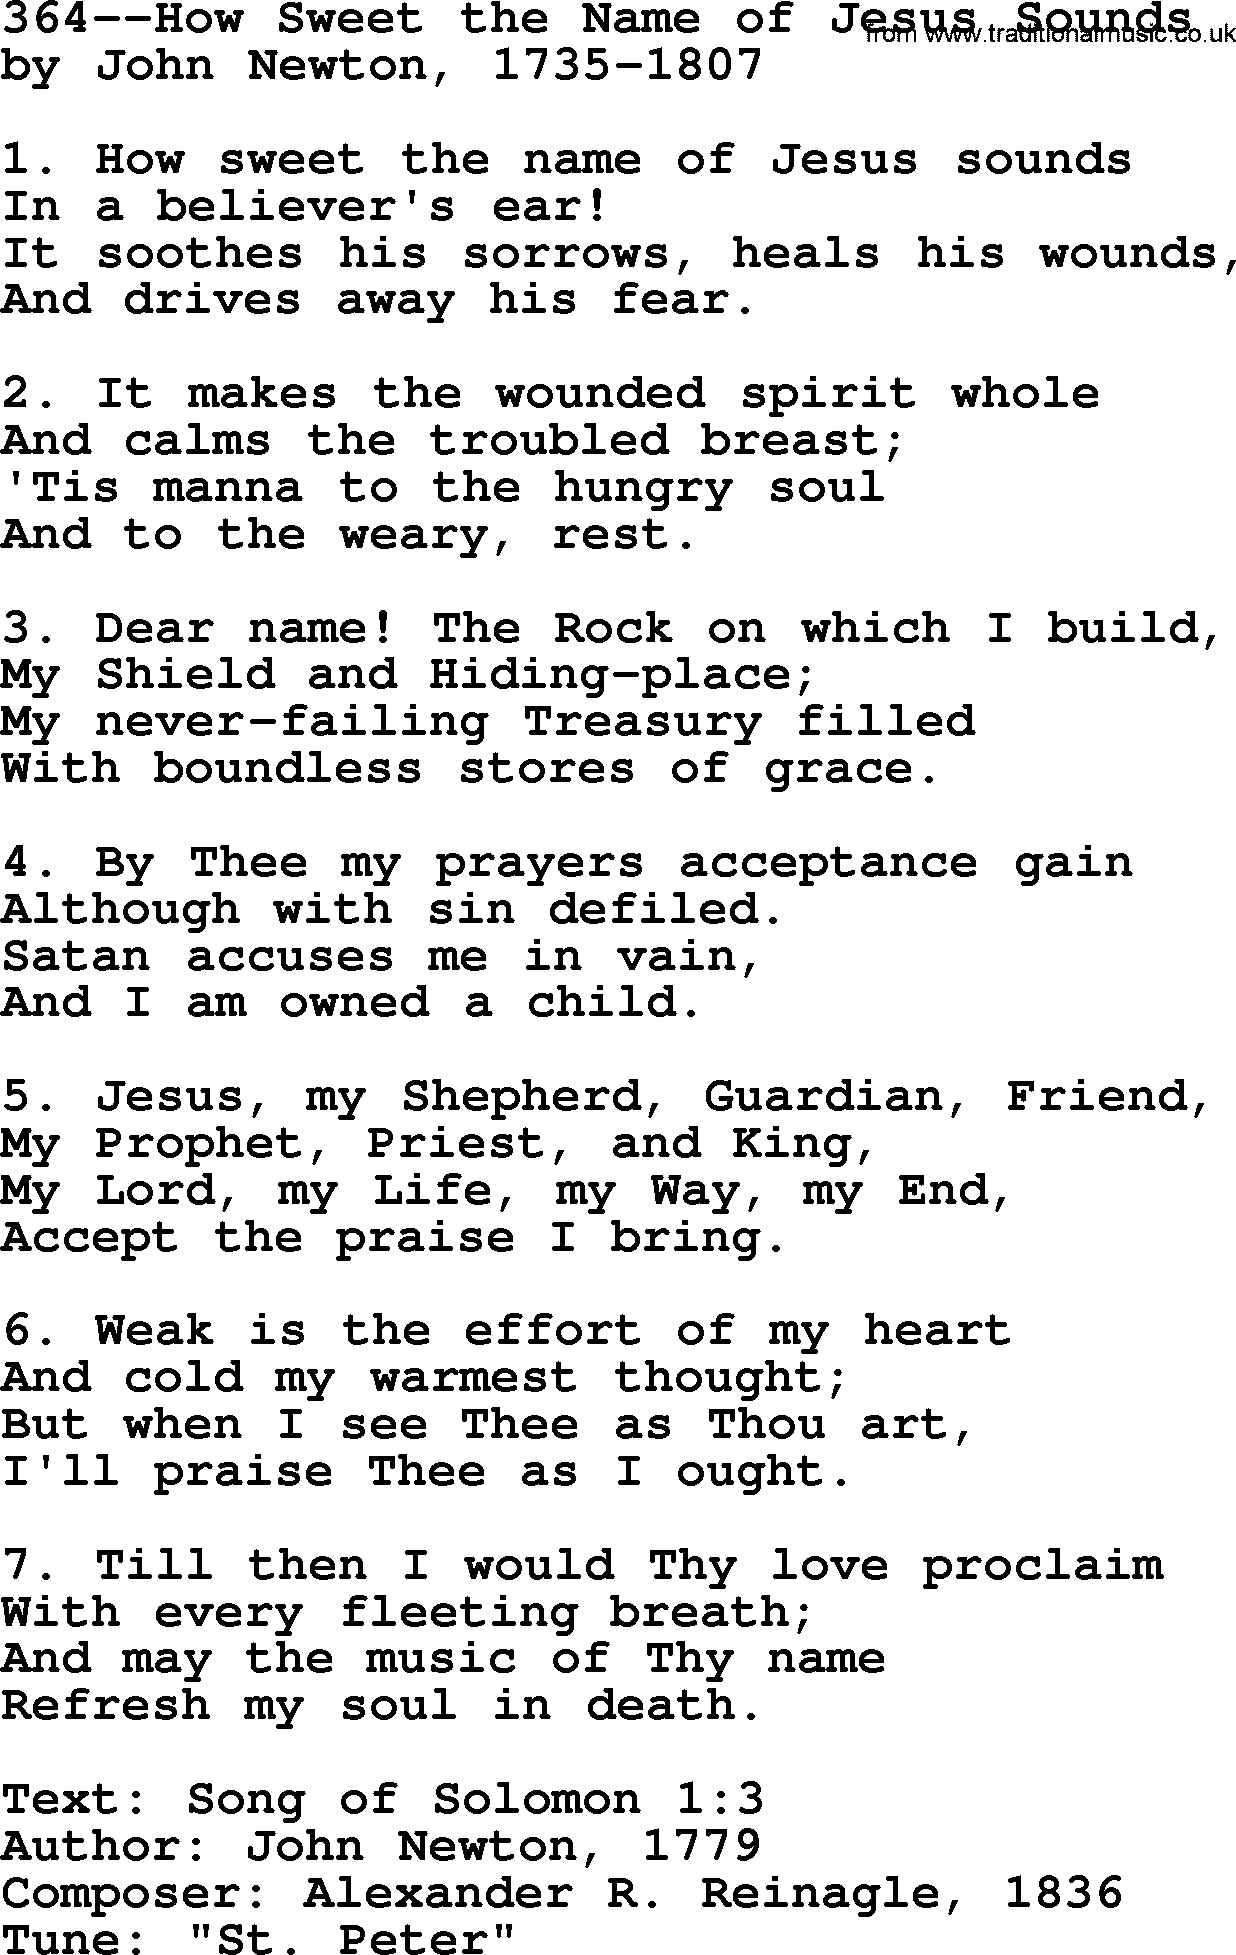 Lutheran Hymn: 364--How Sweet the Name of Jesus Sounds.txt lyrics with PDF